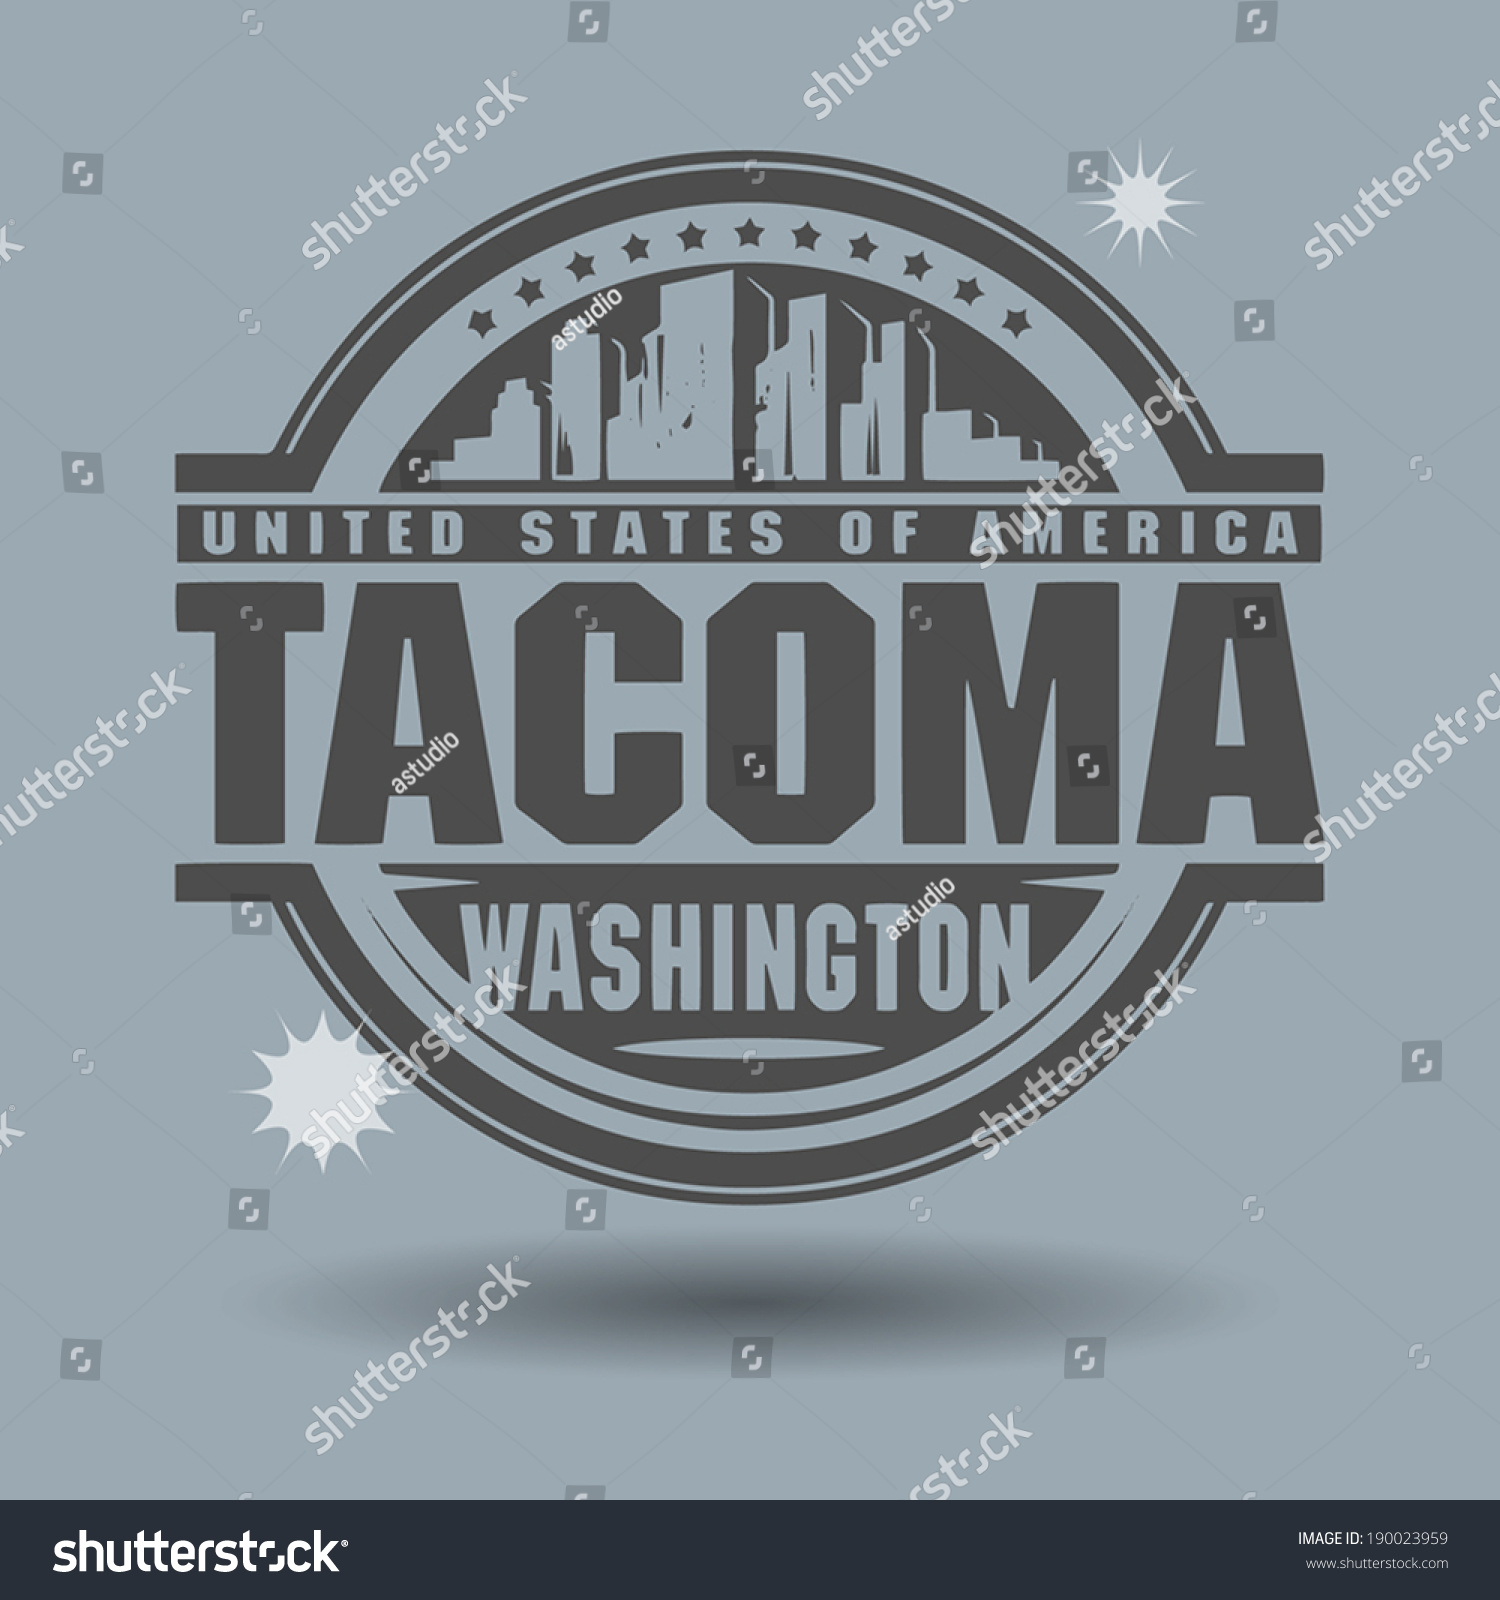 SVG of Stamp or label with text Tacoma, Washington inside, vector illustration svg